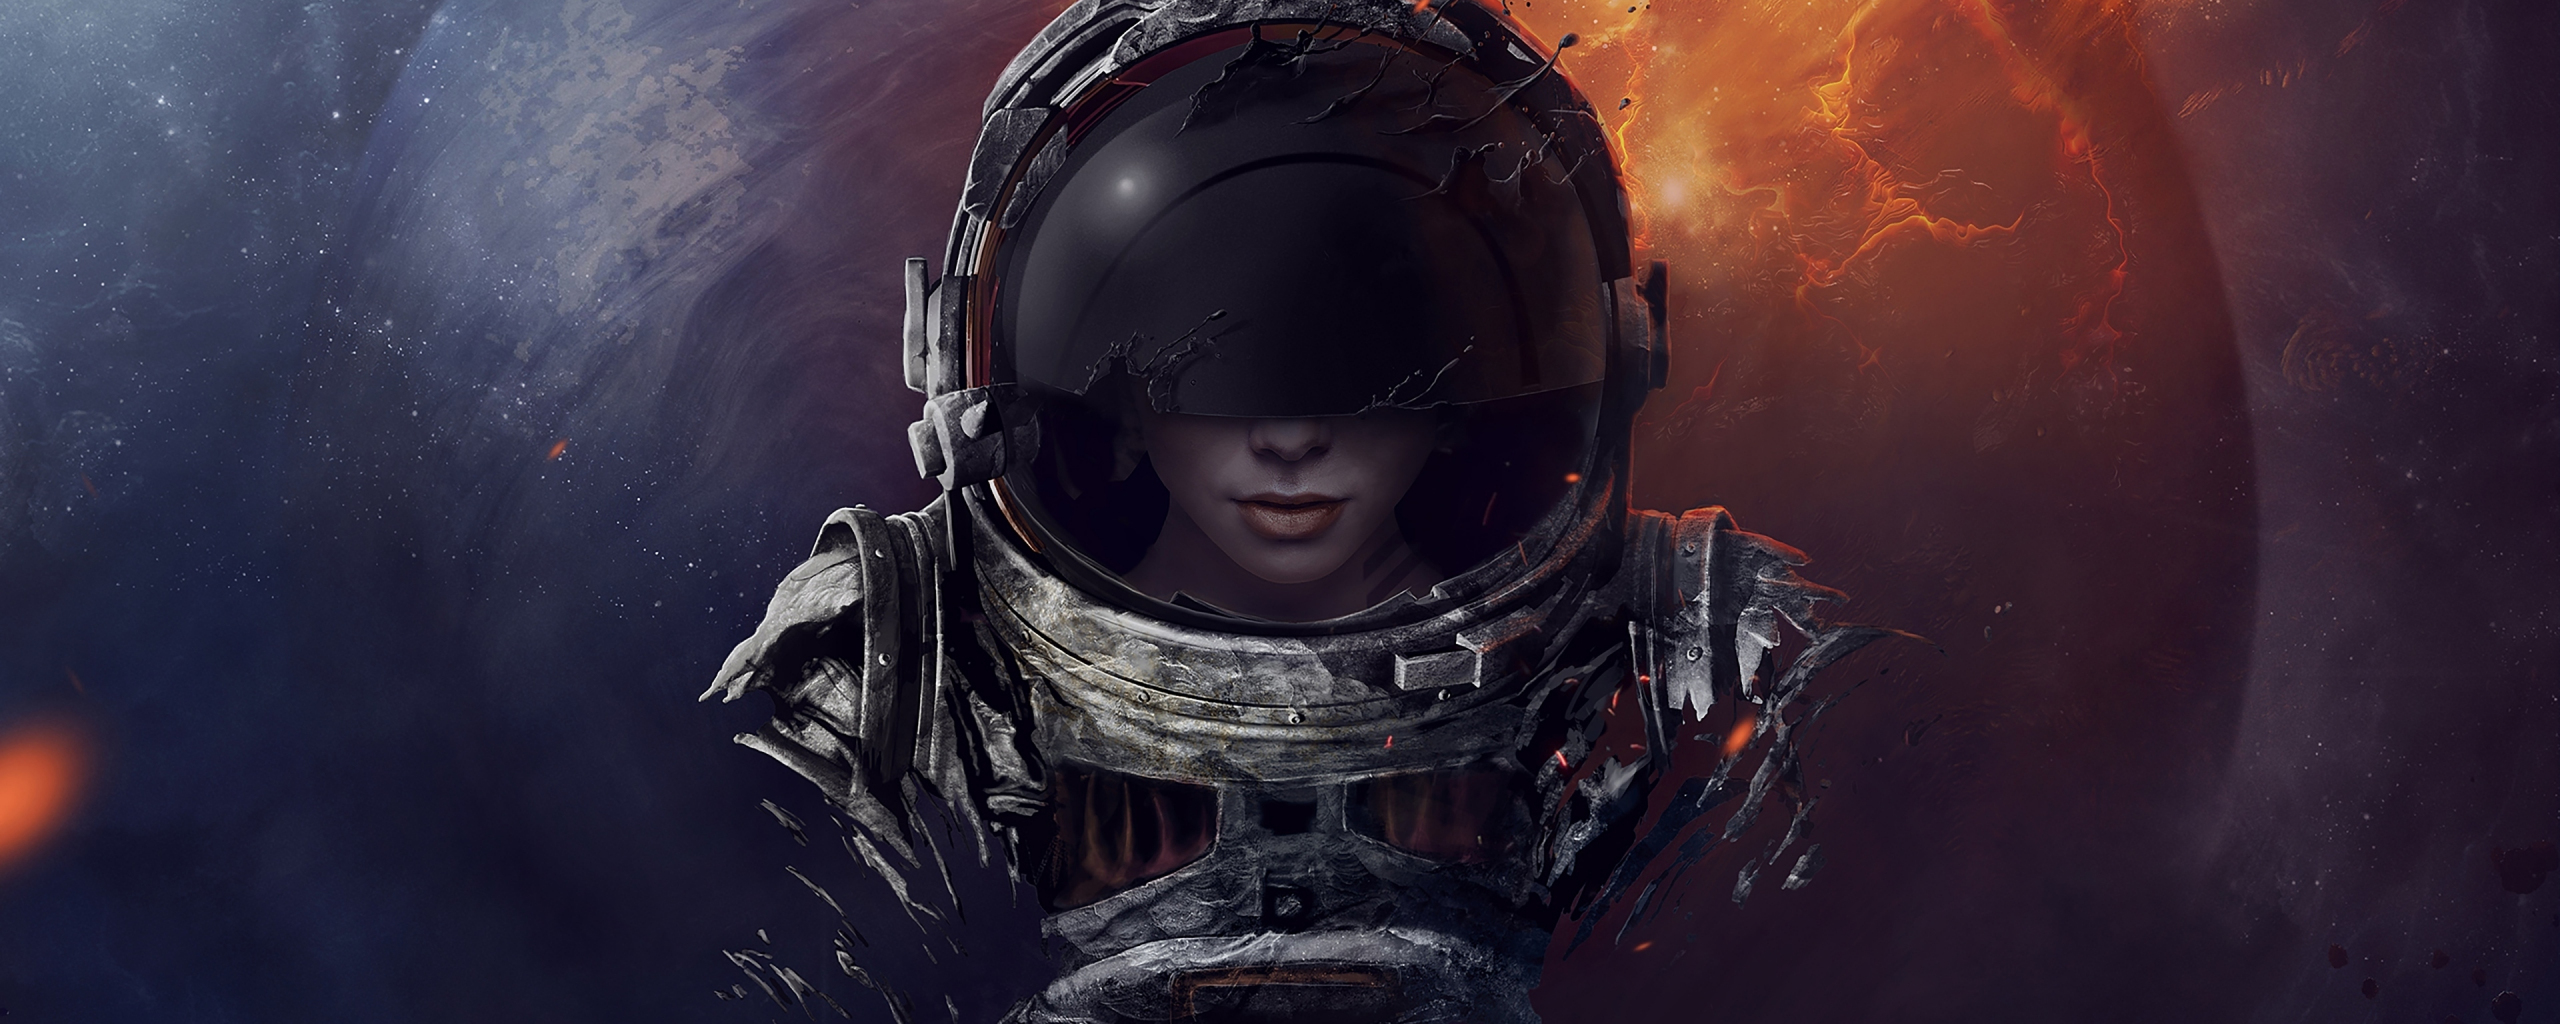 Girl astronaut, artwork, fantasy, 2560x1024 wallpaper